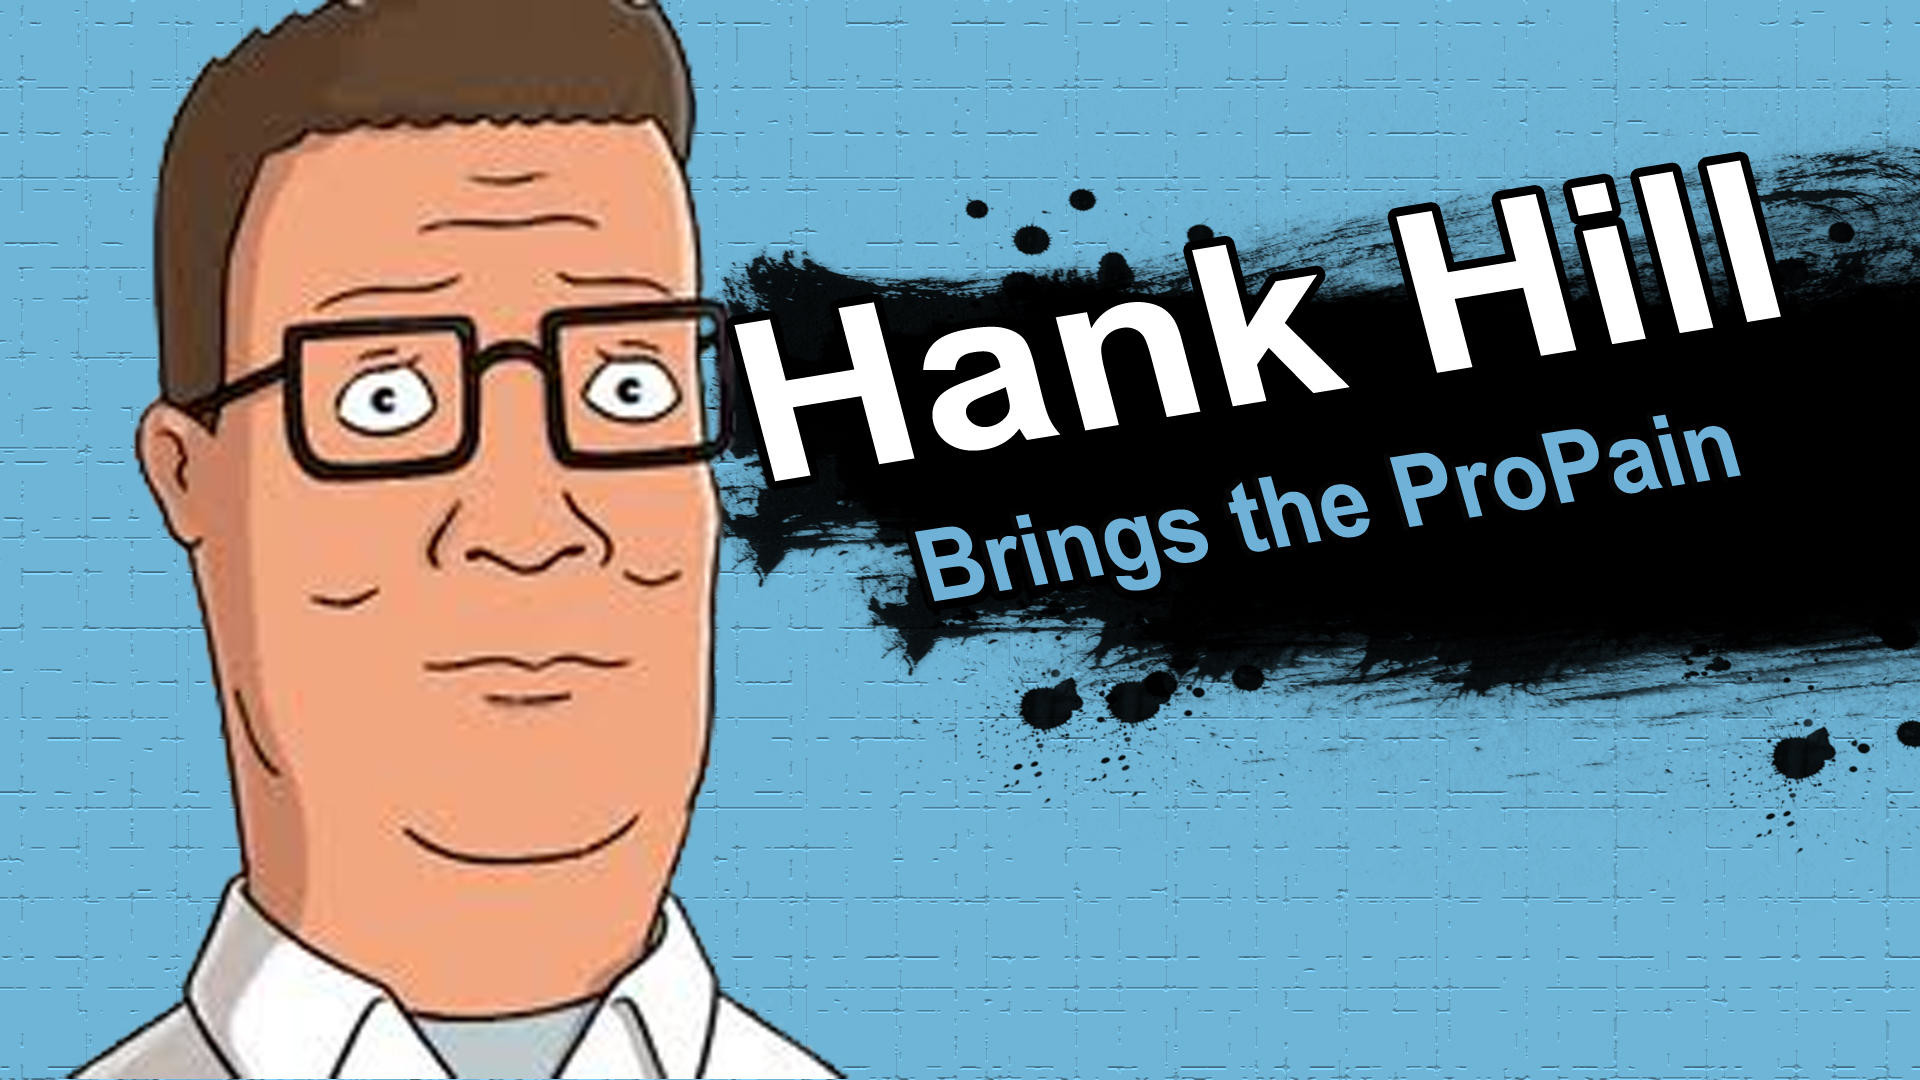 1920x1080 Hank Hill brings the propain | Super Smash Bros. 4 Character Announcement  Parodies | Know Your Meme